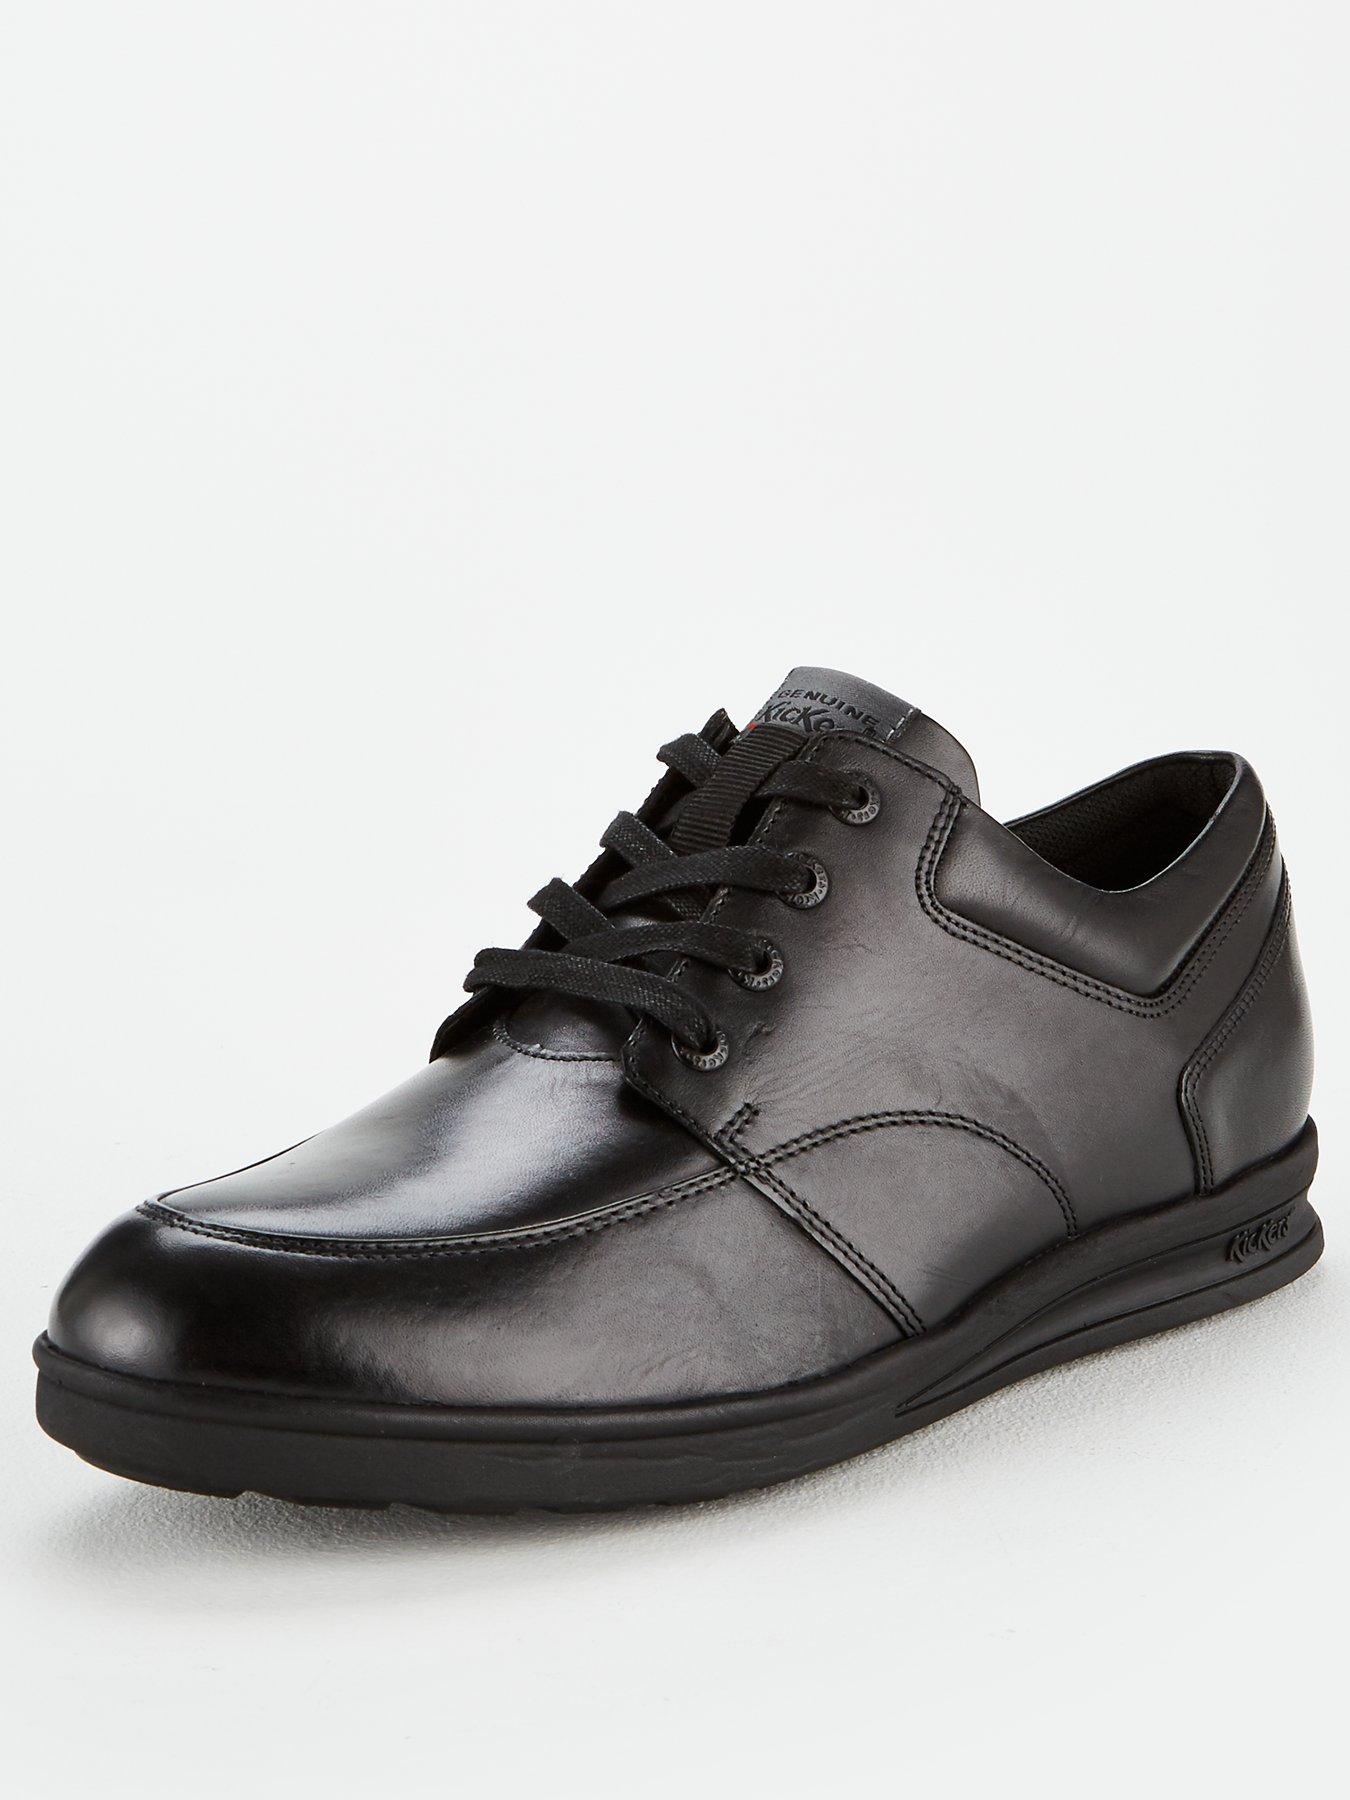 Kickers Troiko Lace Up Shoes - Black 